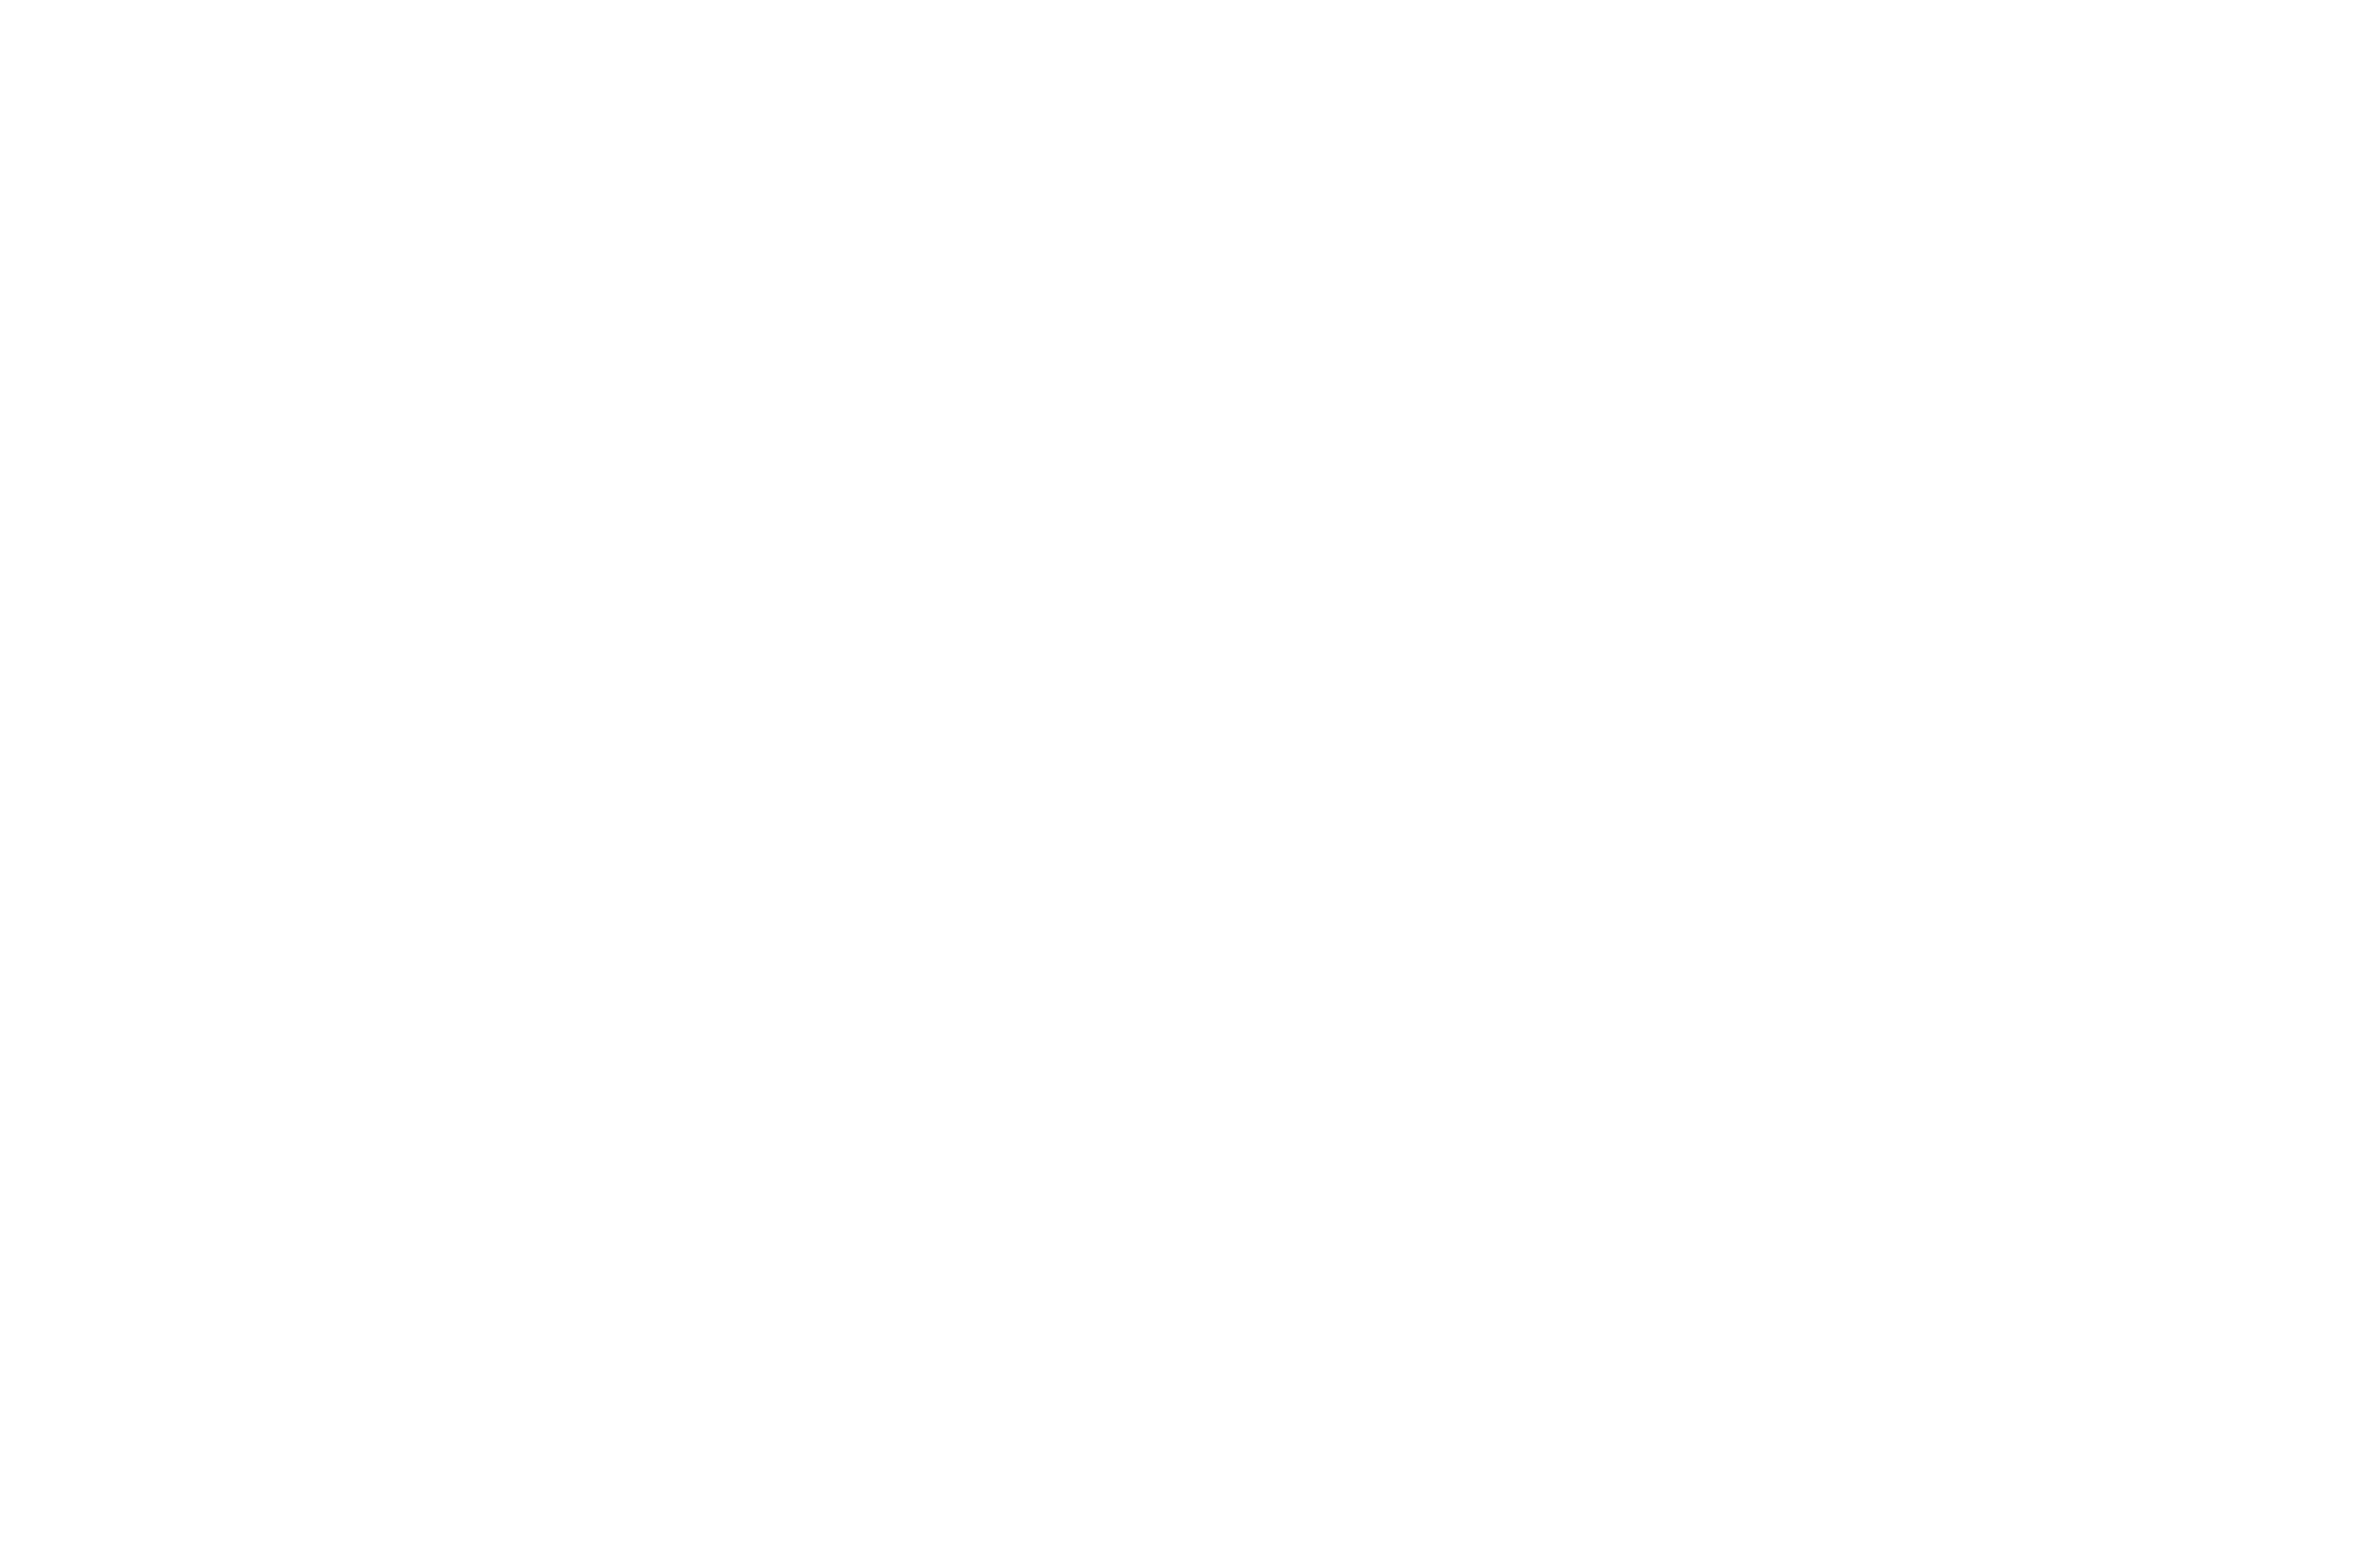 Fresno Pacific University logo.